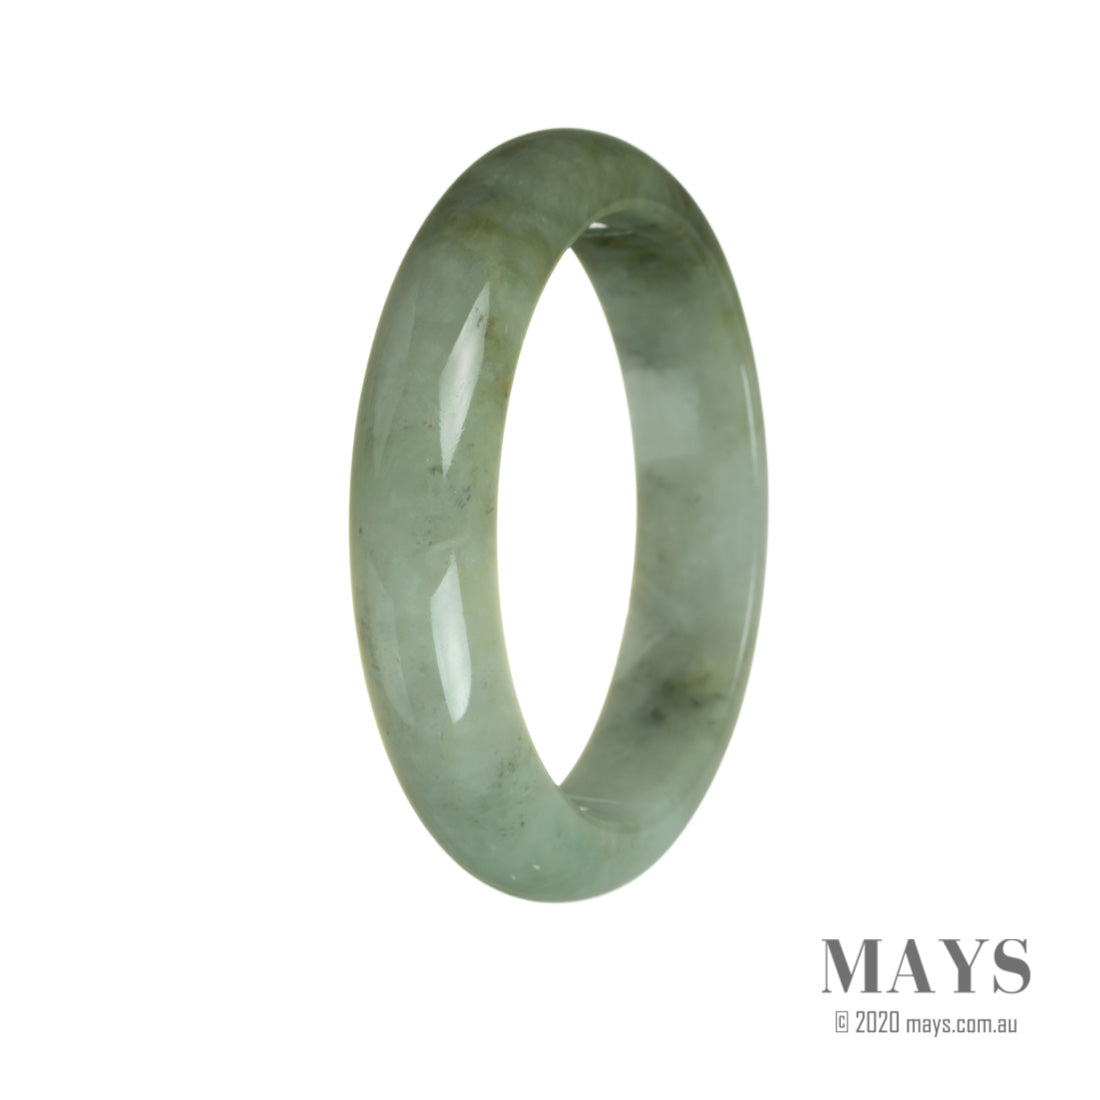 A half moon-shaped bangle made of real untreated green and pale green Burma jade, measuring 60mm.